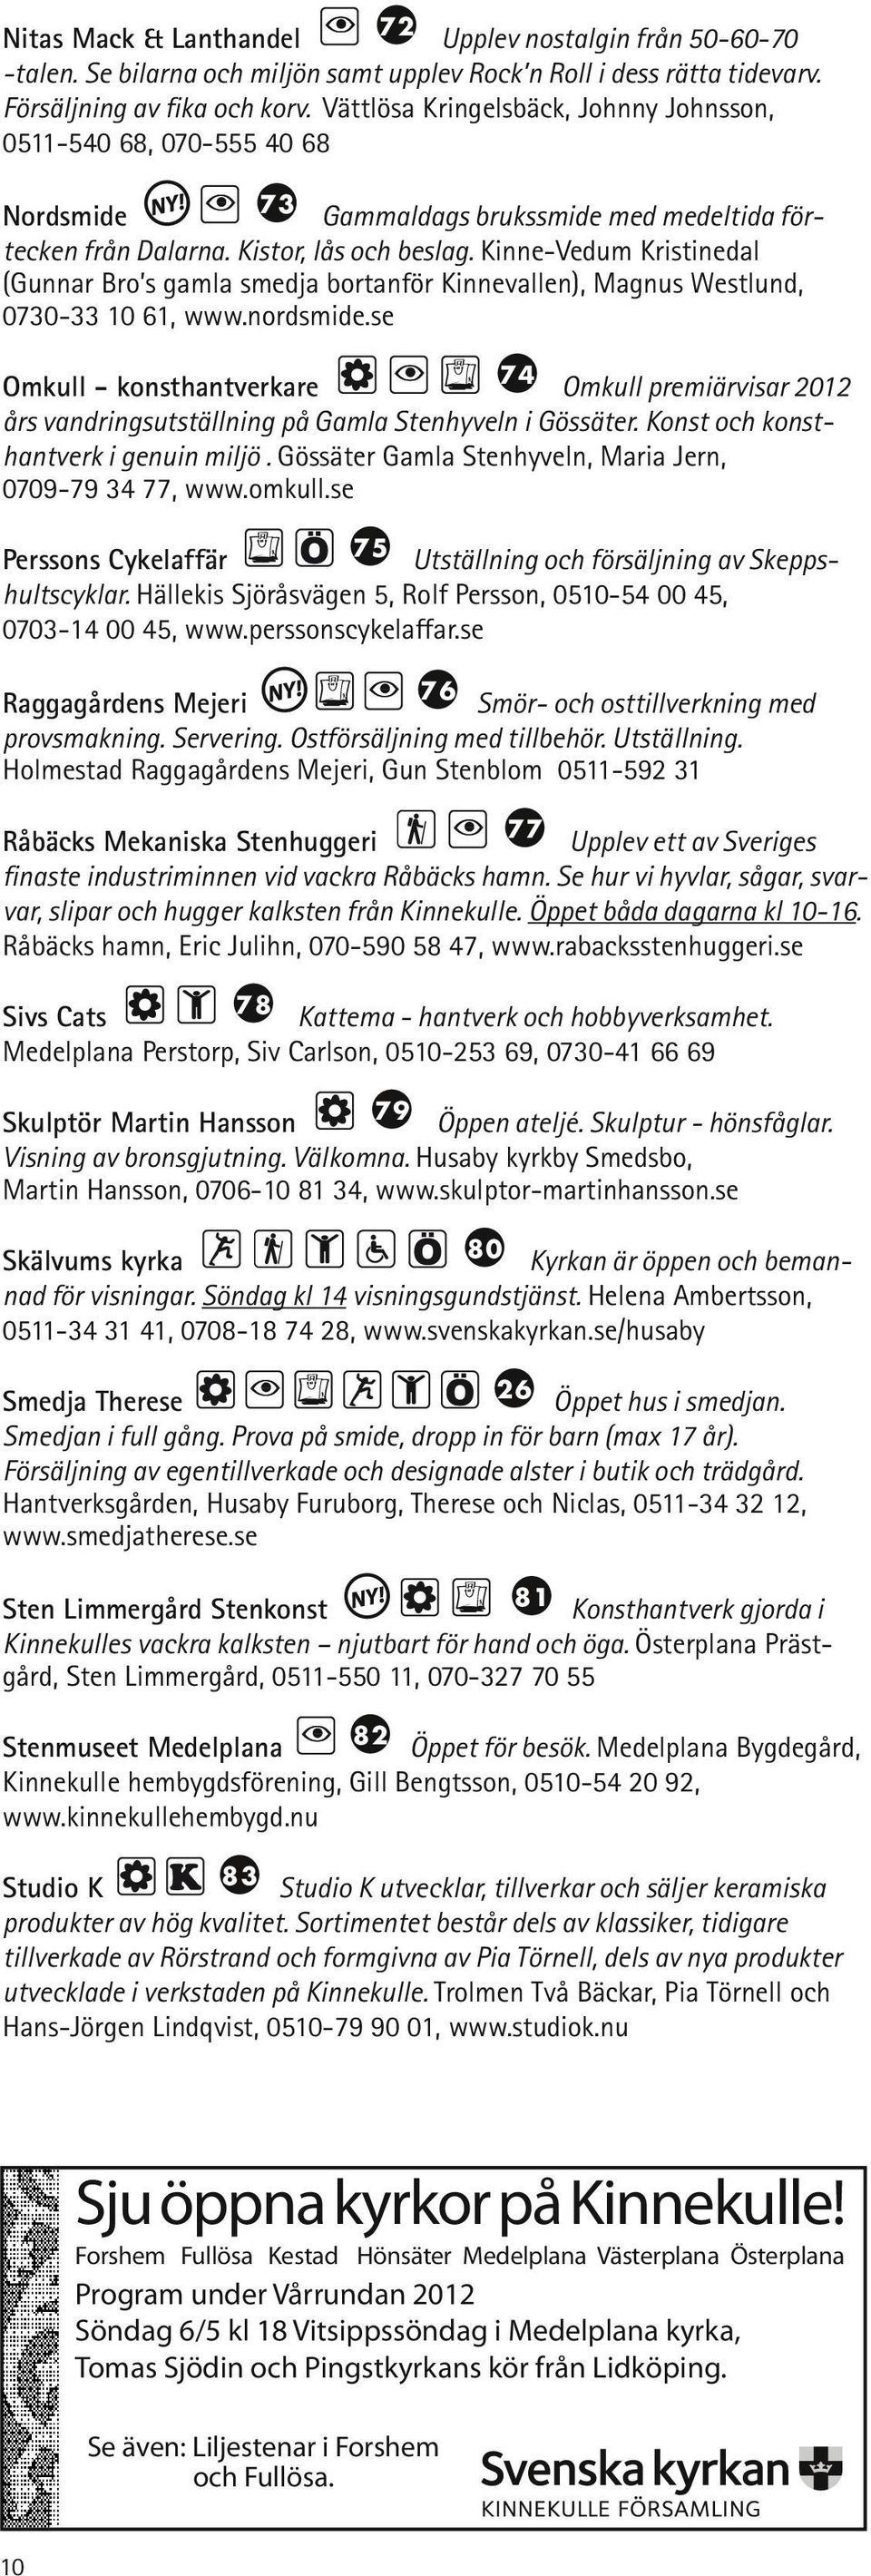 Kinne-Vedum Kristinedal (Gunnar Bro s gamla smedja bortanför Kinnevallen), Magnus Westlund, 0730-33 10 61, www.nordsmide.